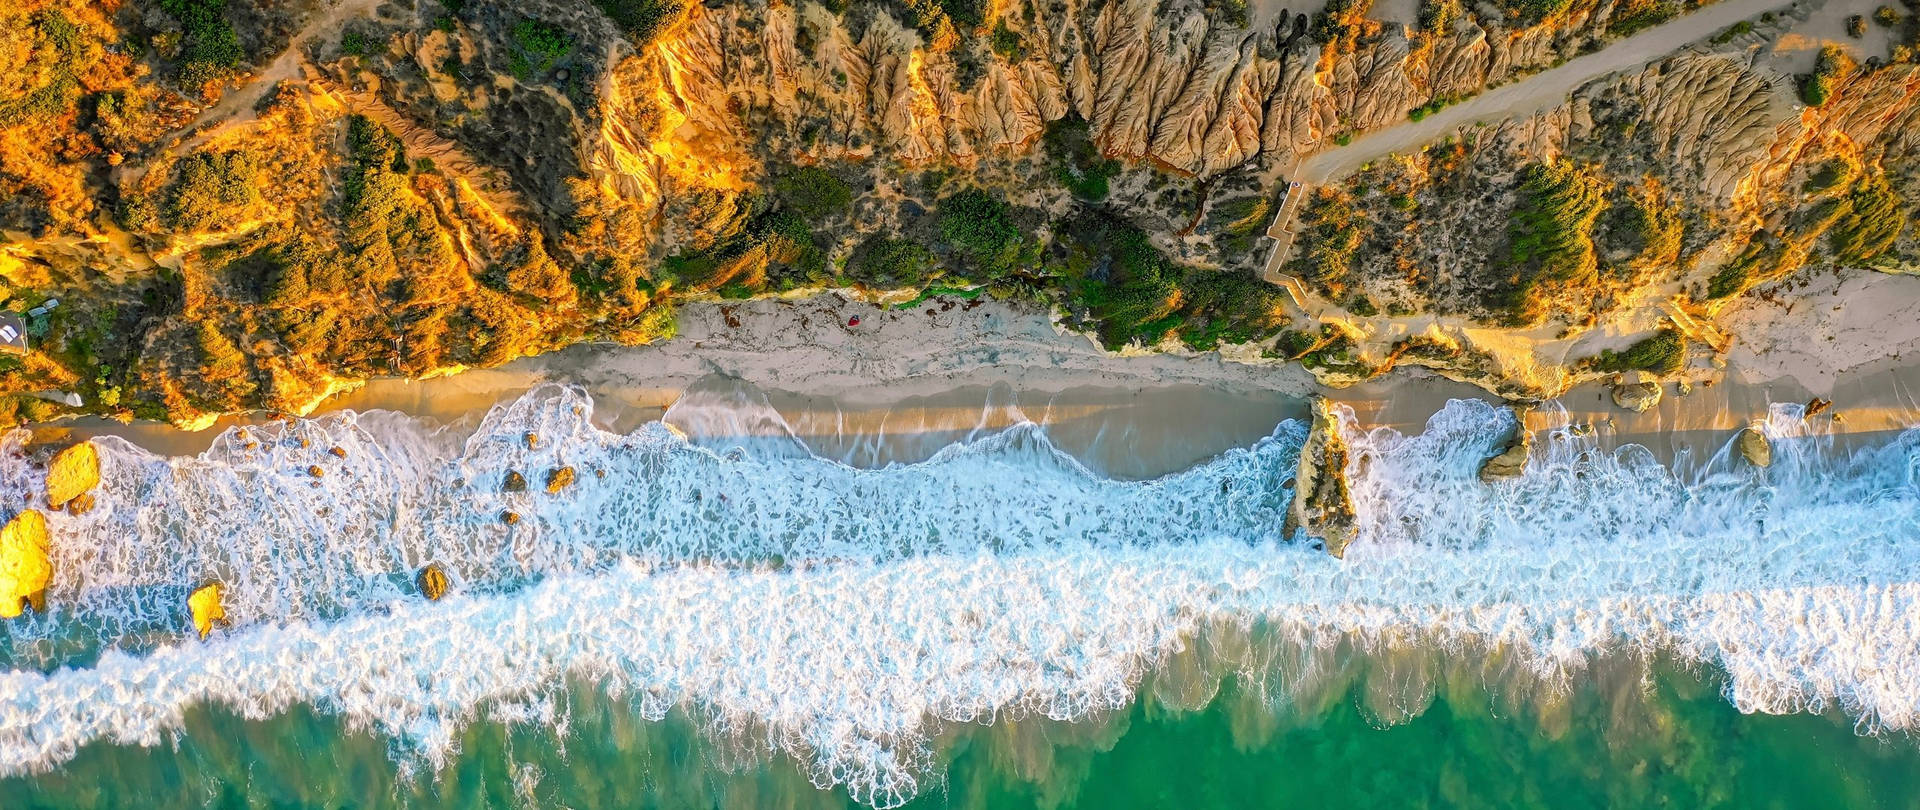 Malibu Beach Aerial View Background